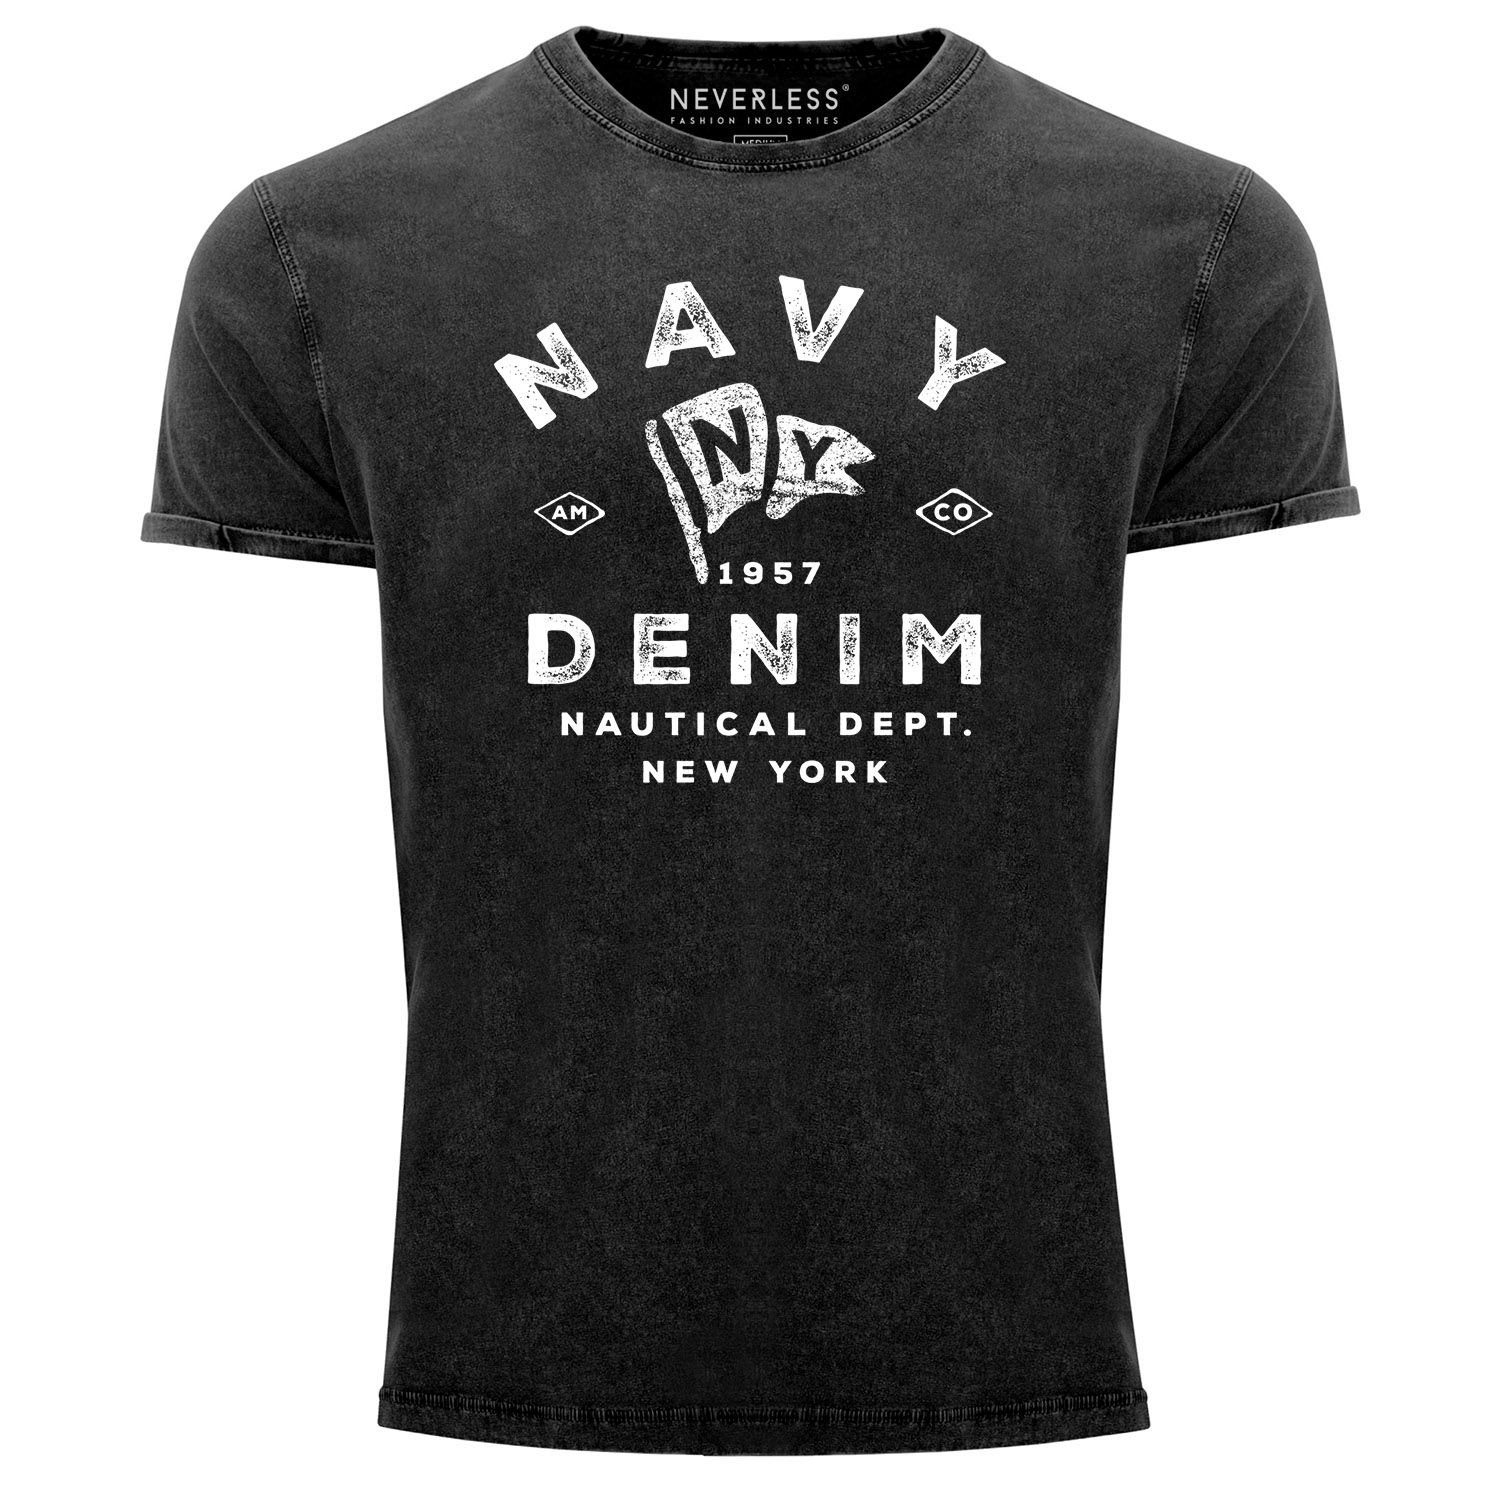 Neverless Print-Shirt Herren Vintage Shirt Retro Motiv Schriftzug Navy  Denim Nautical New York Vintagedesign Printshirt T-Shirt Aufdruck Used Look  Neverless® mit Print